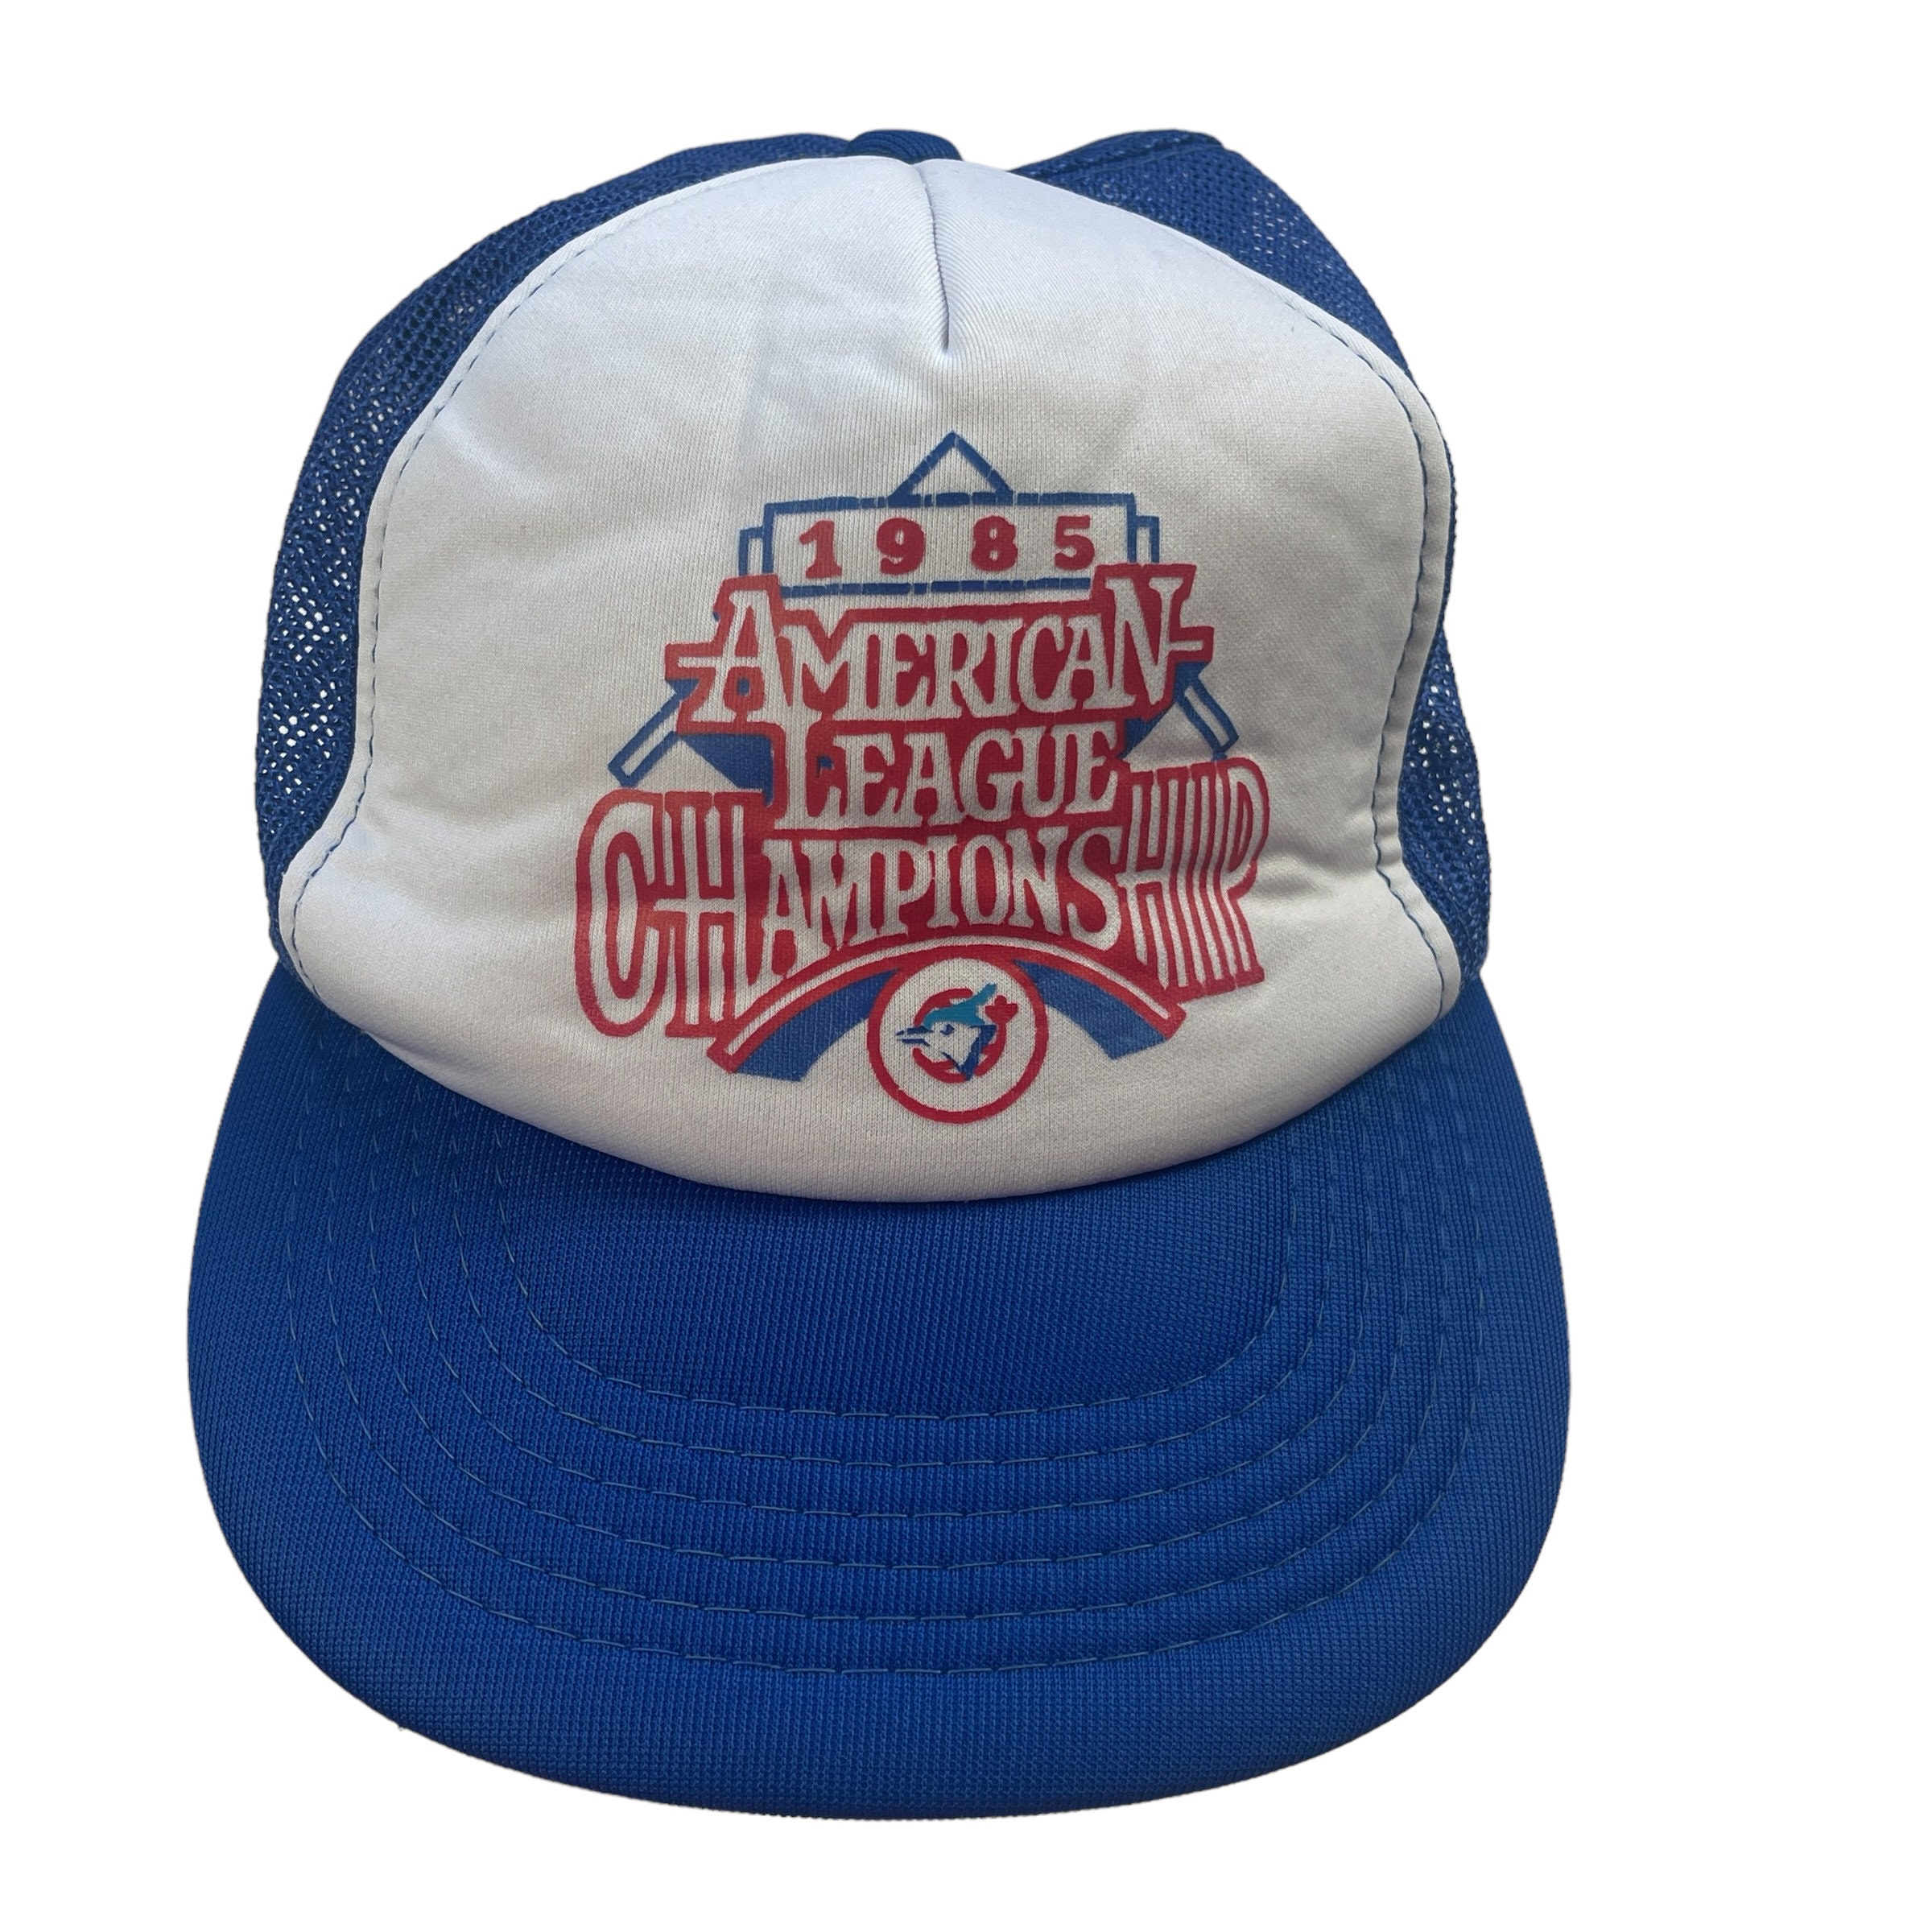 Vintage Snap Back Hat Trucker Cap 1985 American League Champions Rare Adjustable